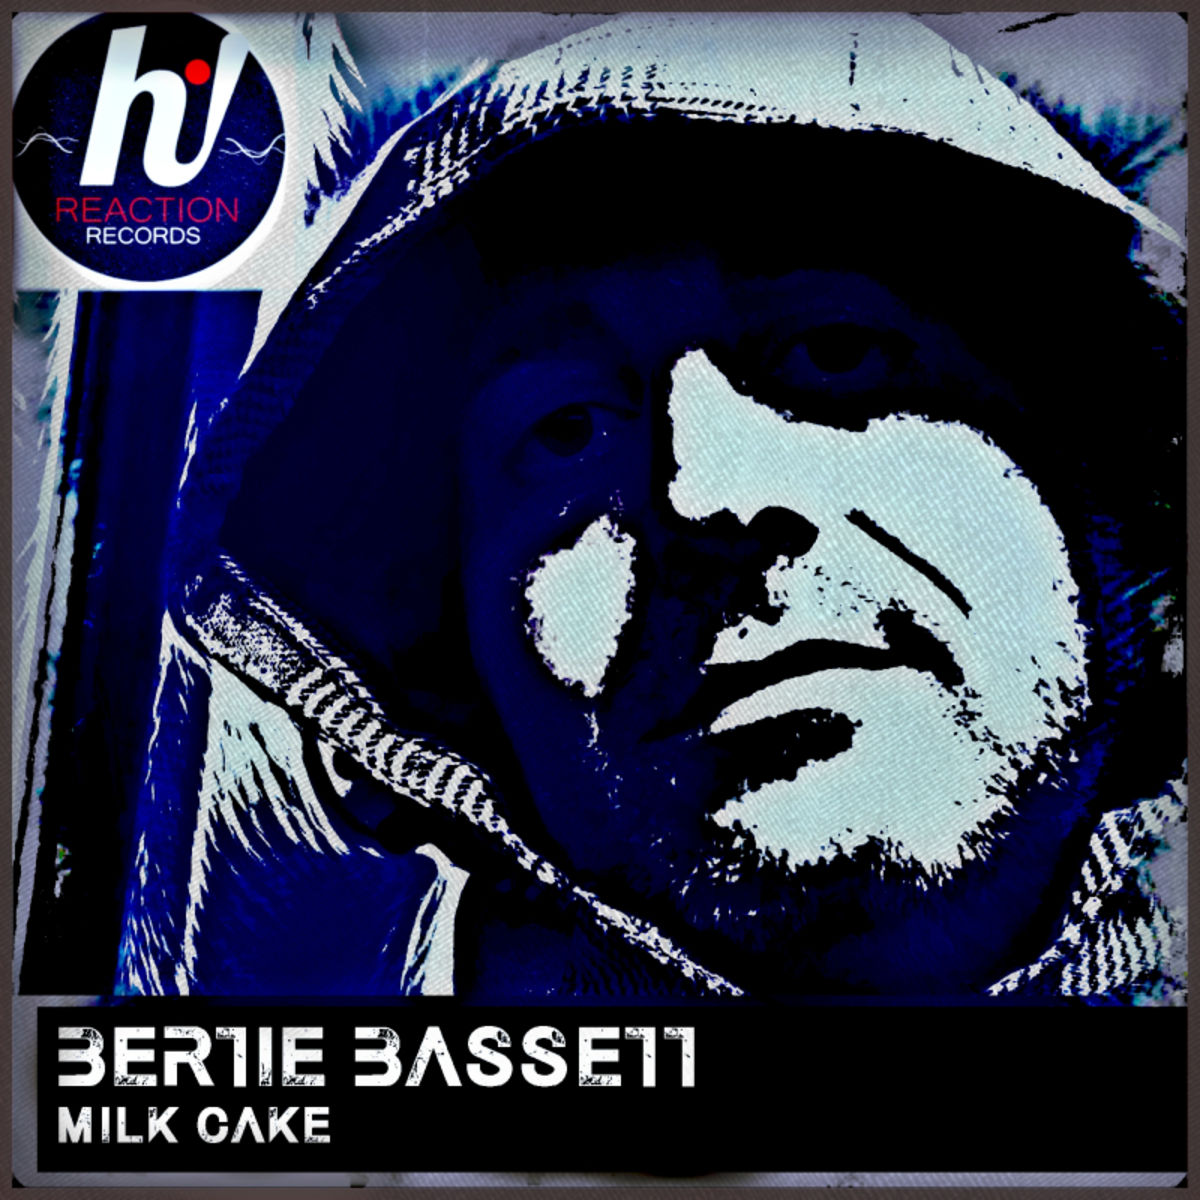 Bertie Bassett - Milk Cake / Hi! Reaction